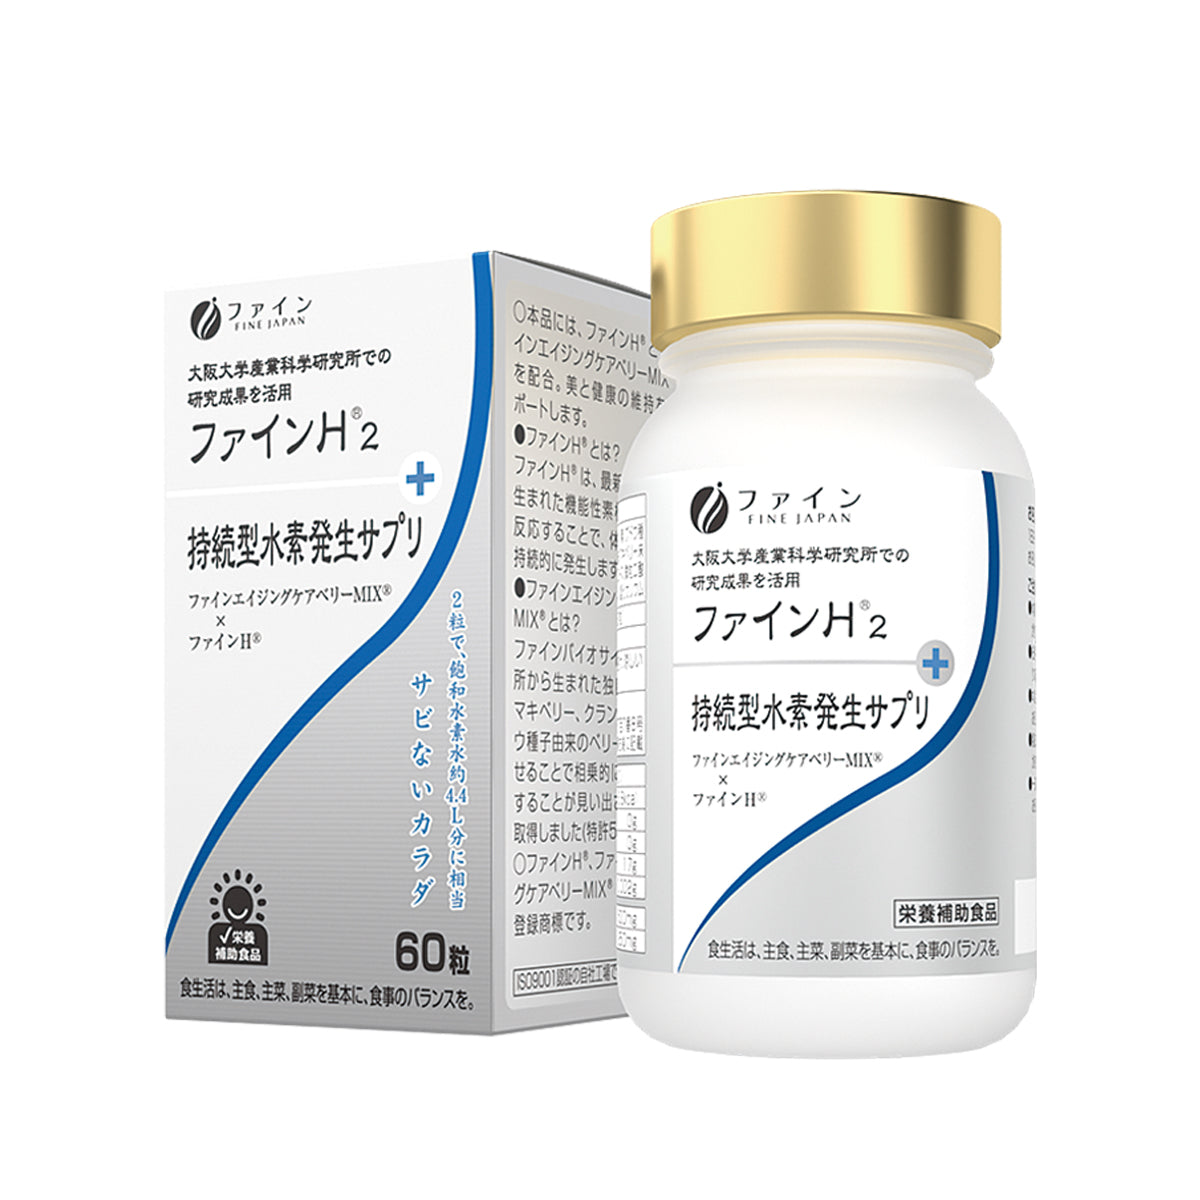 FINE H2 Hydrogen Supplement (60 Capsules), FINE JAPAN